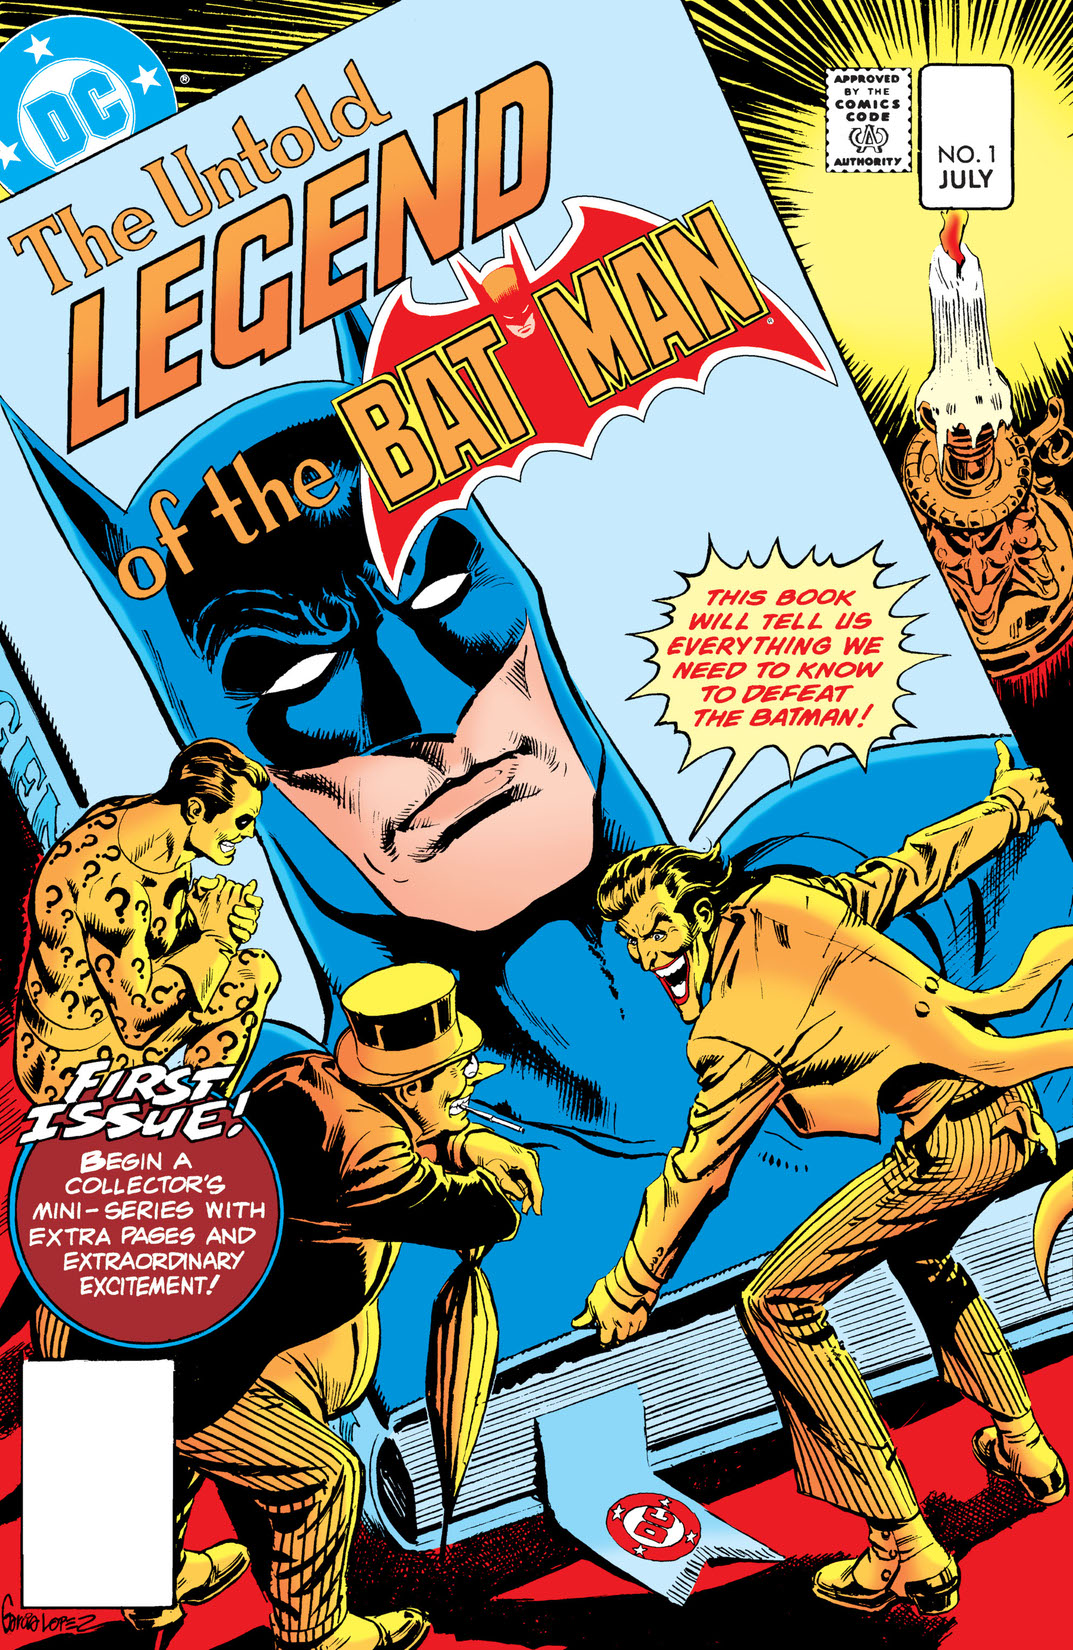 The Untold Legend of the Batman #1 preview images